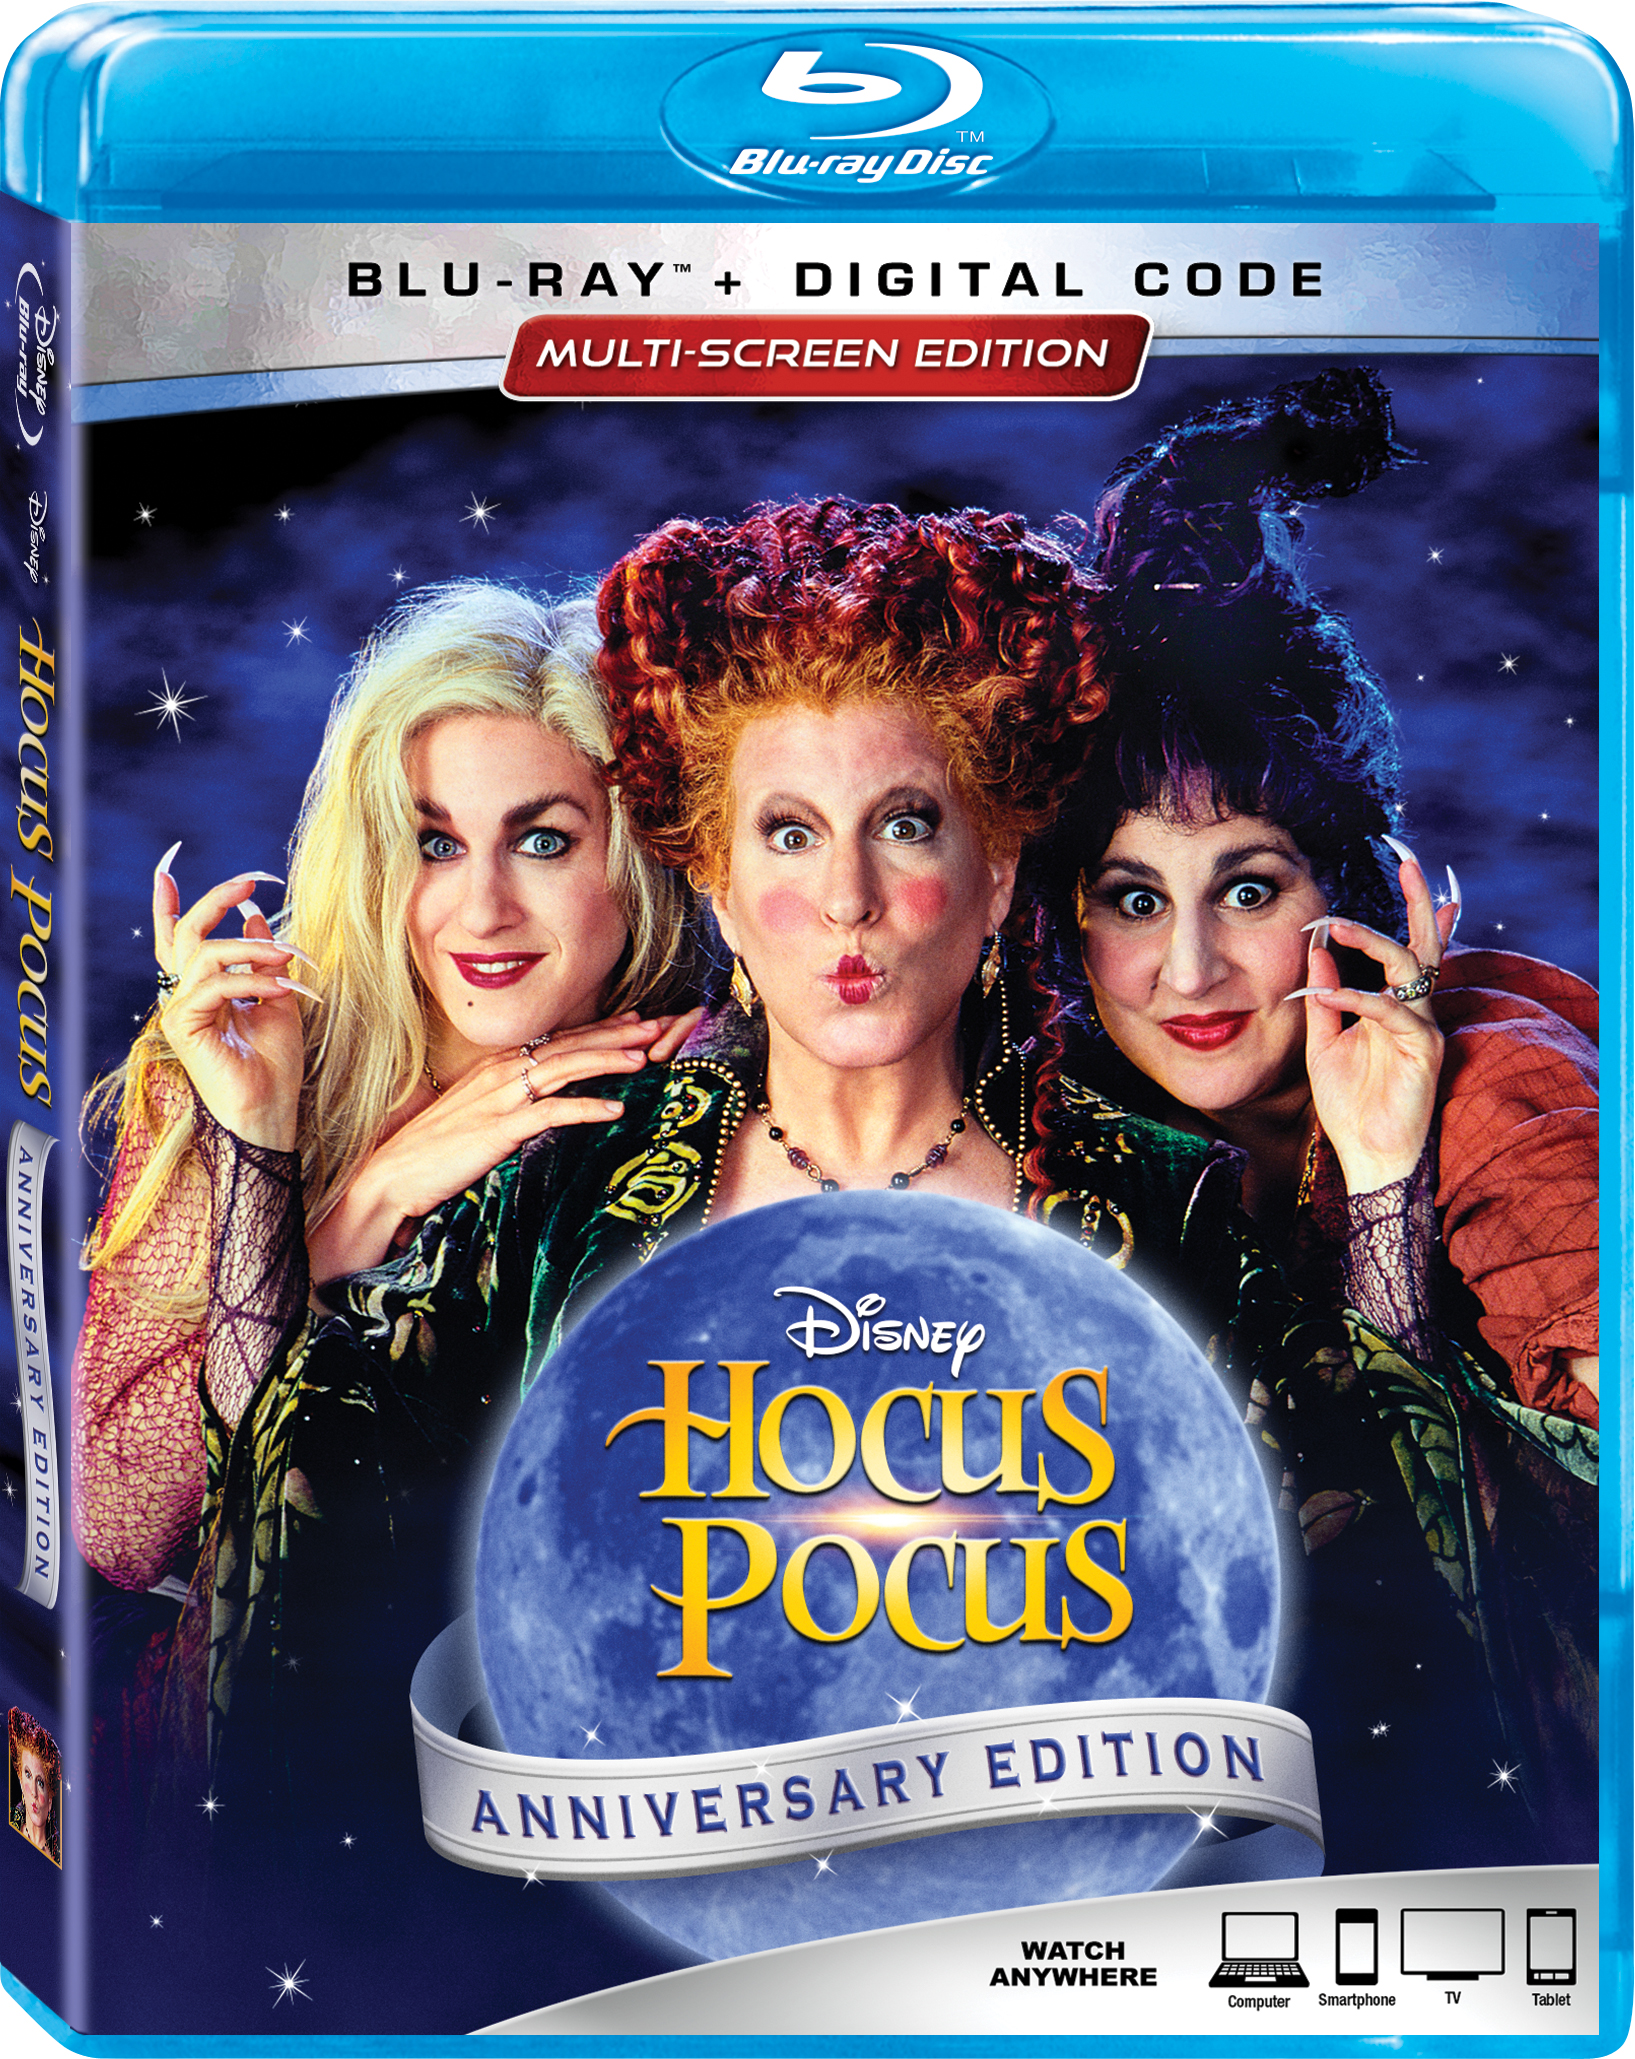 Hocus Pocus 25th Anniversary Blu-Ray Combo Pack cover (Walt Disney Studios Home Entertainment)